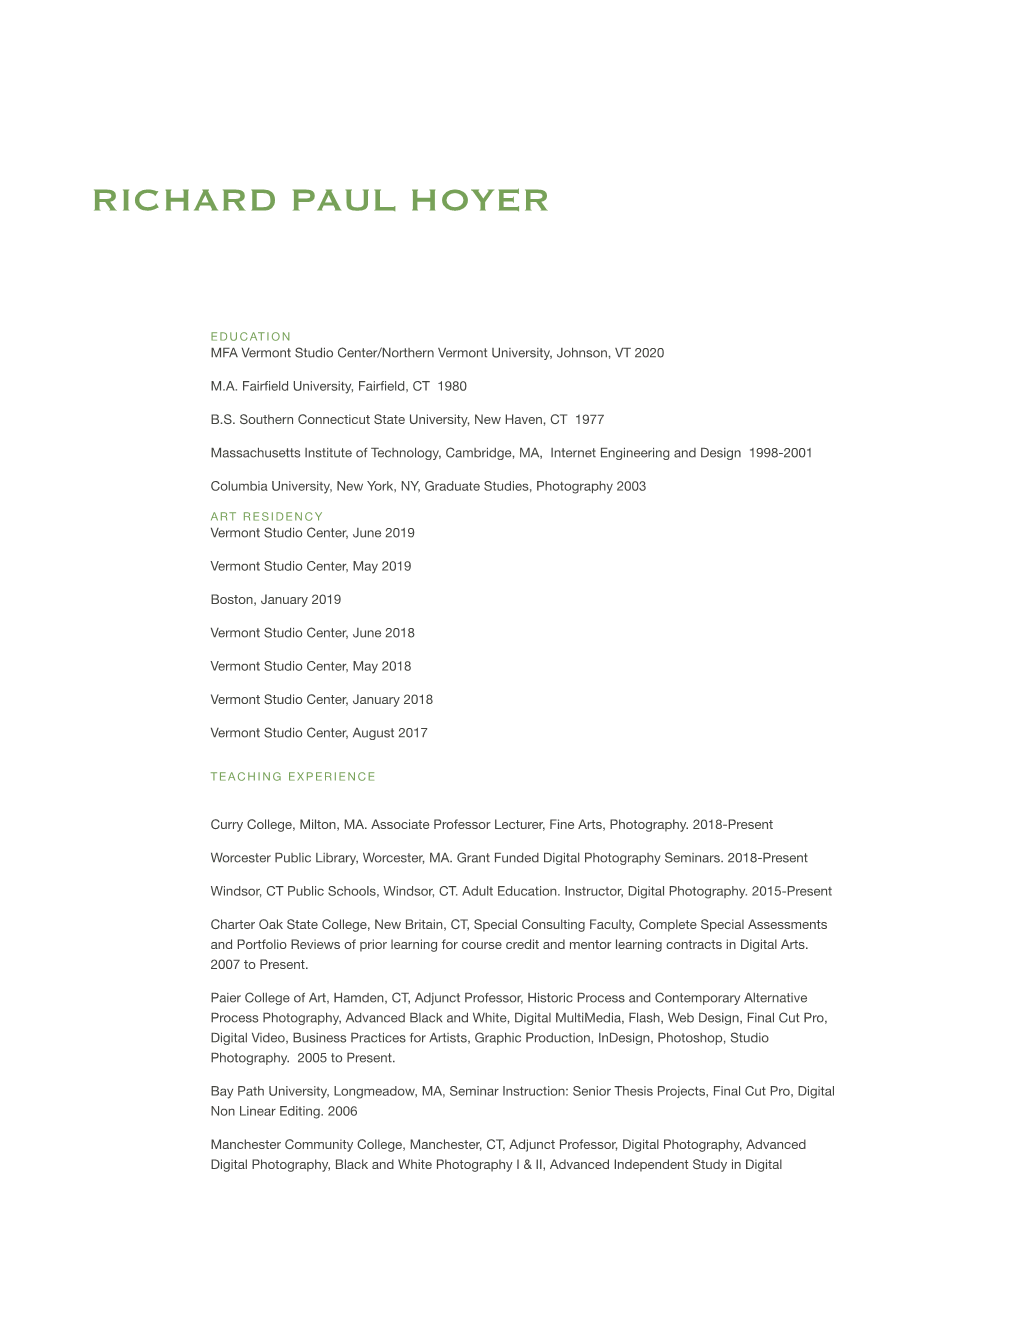 Richard Hoyer CV